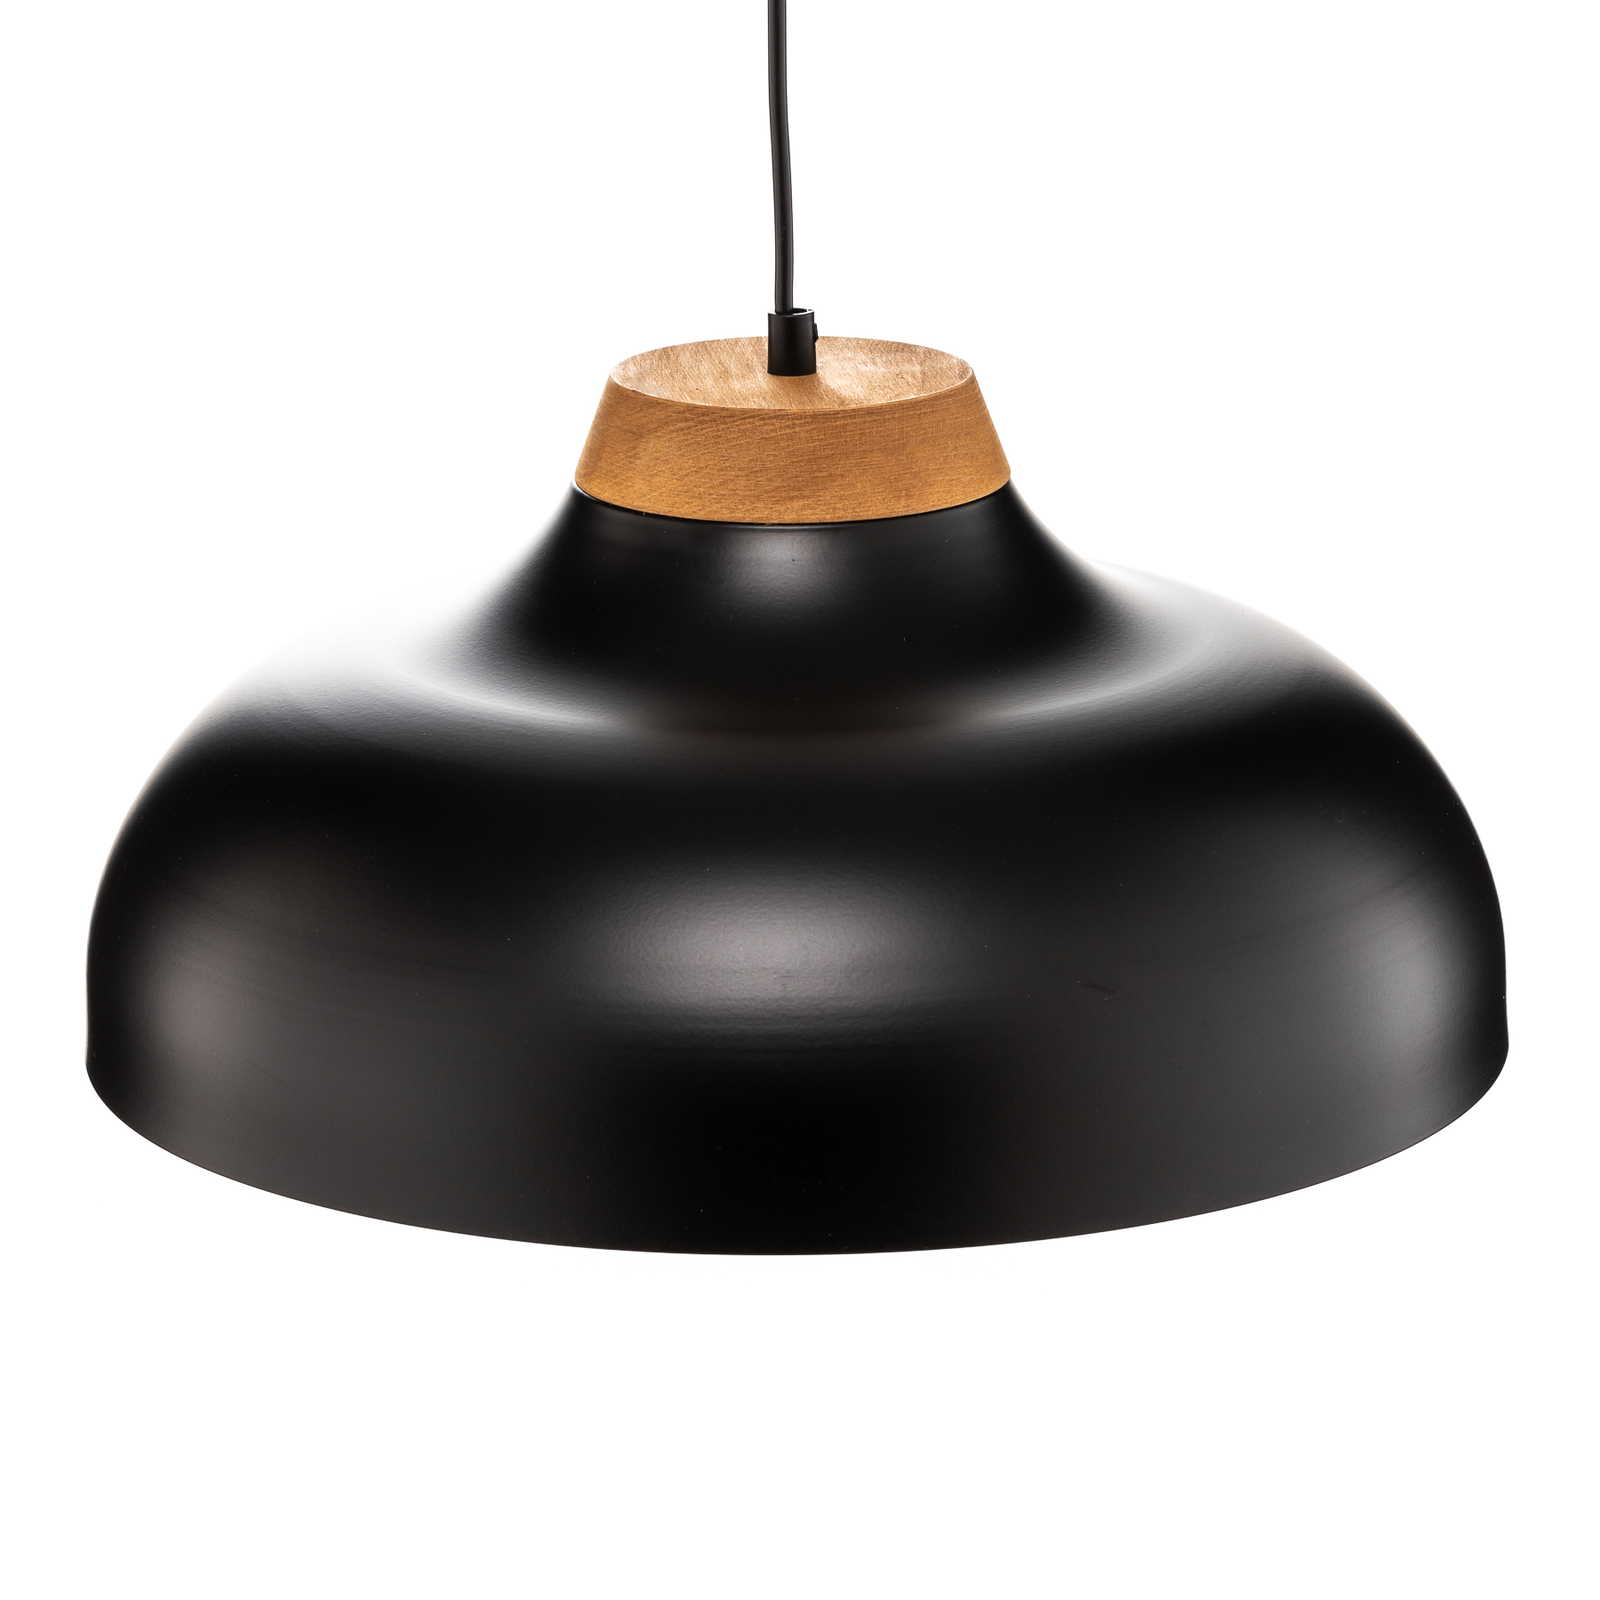 Gus pendant light with metal shade, black